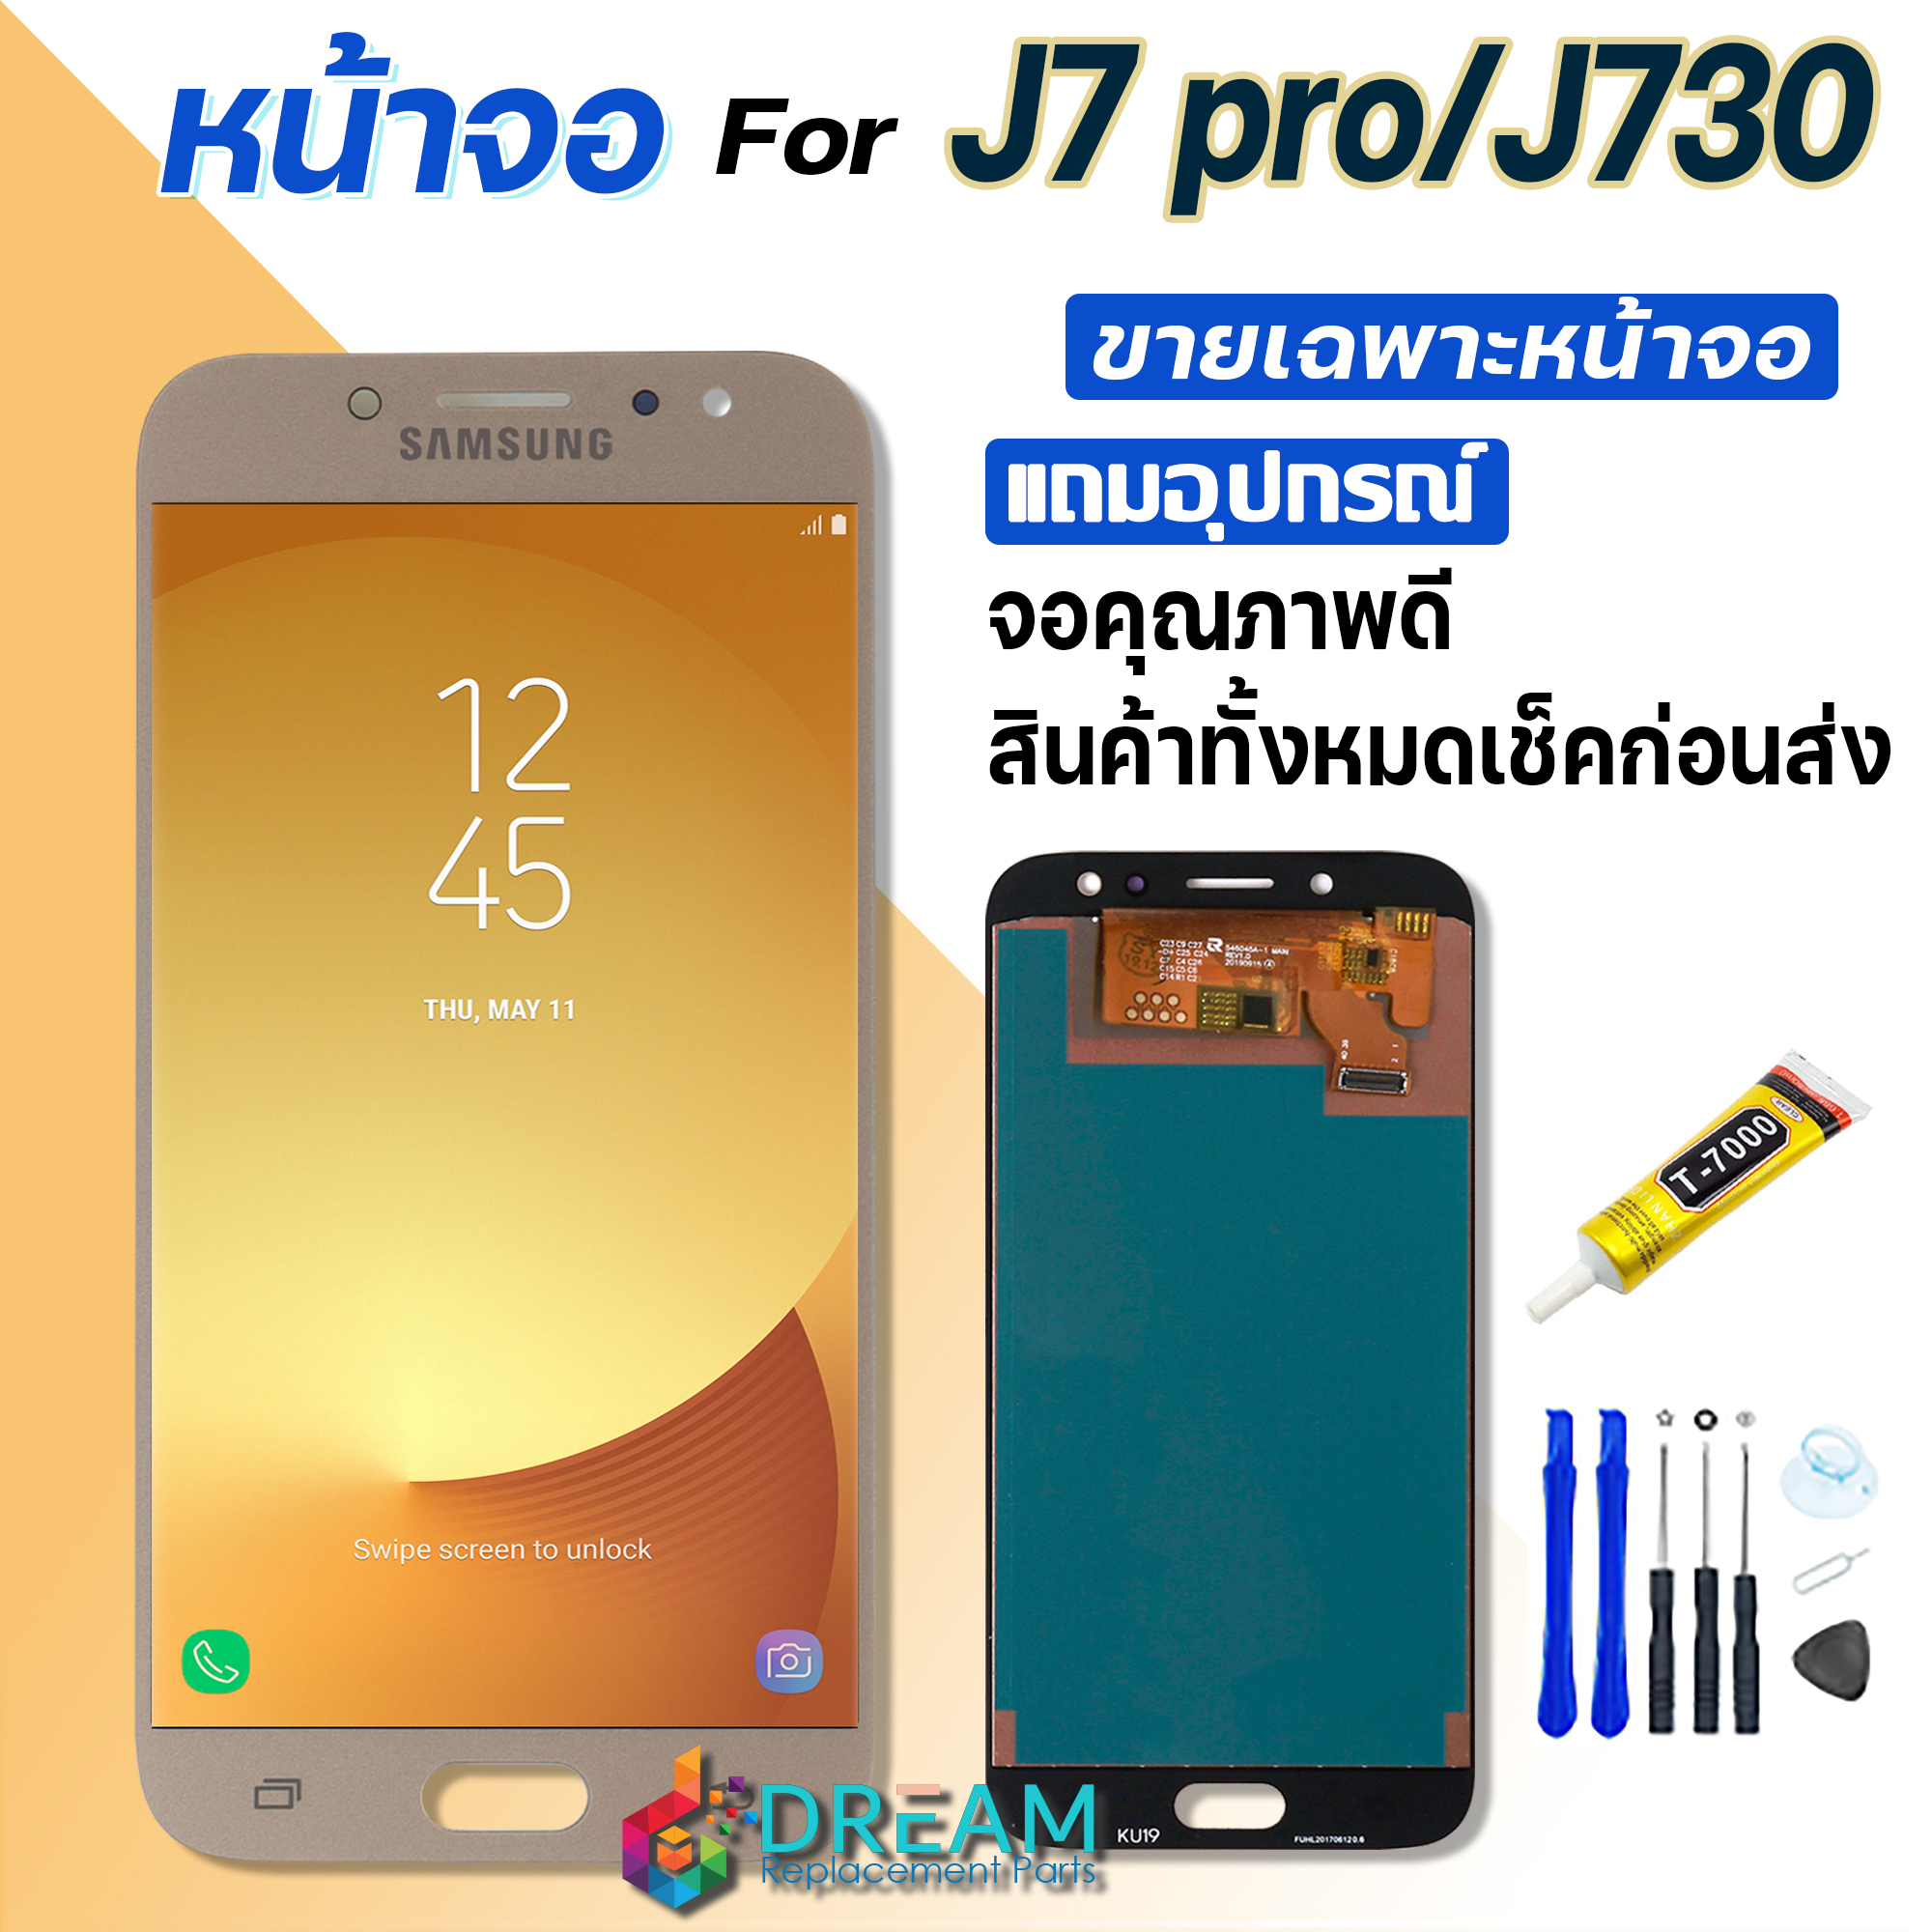 Dream mobile หน้าจอ Samsung galaxy J7 pro/J730/J7pro พร้อมทัชสกรีน LCD Display จอ + ทัช ซัมซุง กาแลคซี่ J7 pro/J730/J7pro incell แถมไขควง สามารถเลือกซื้อพร้อมกาว